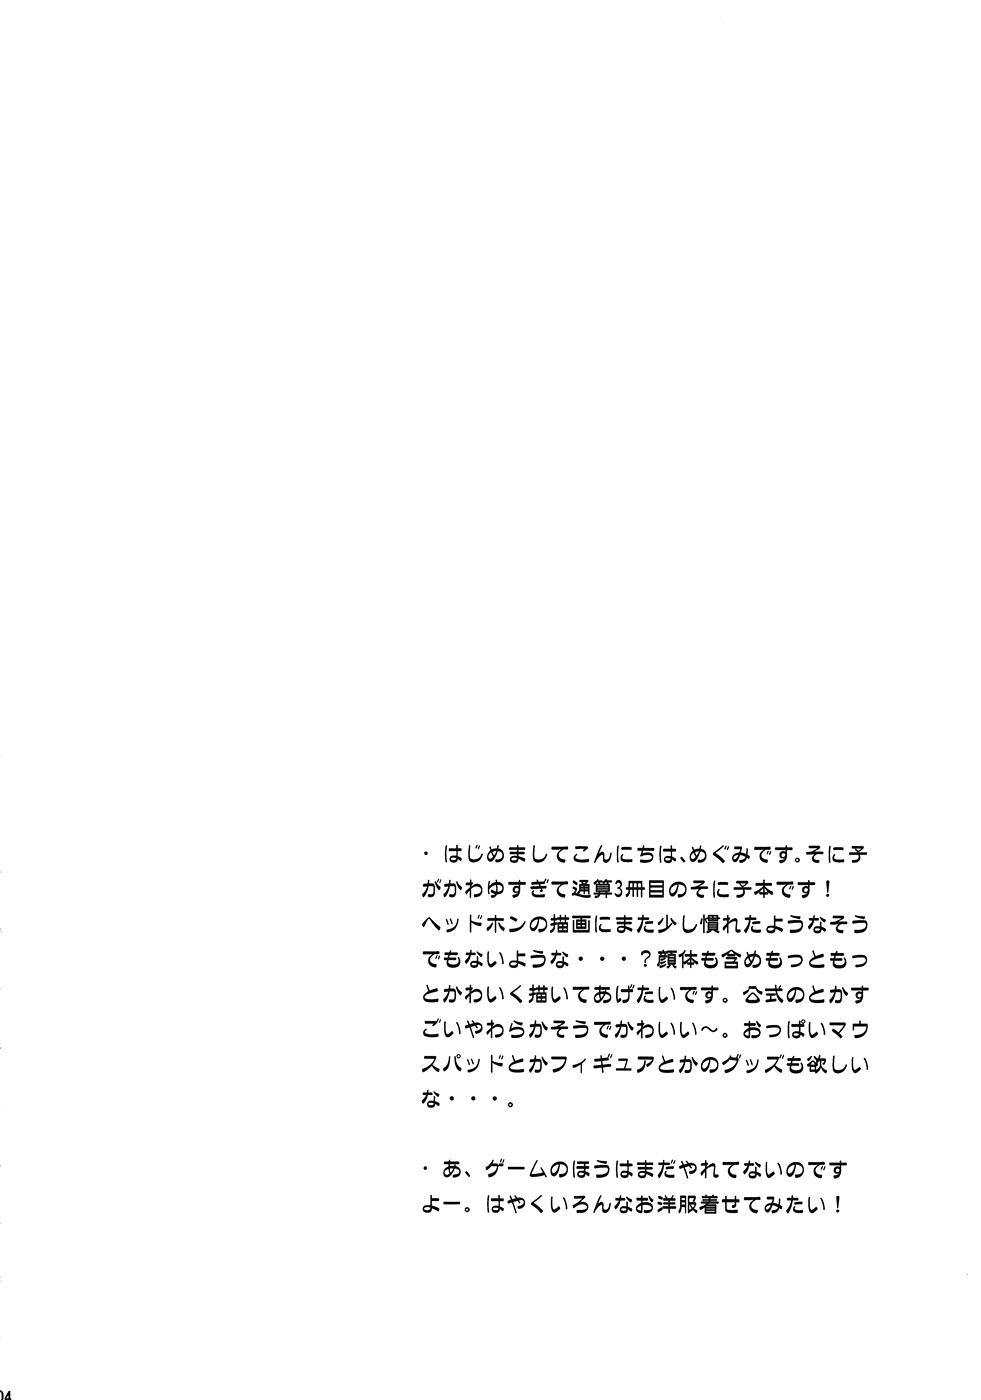 Safadinha Takakuteki Idol - Super sonico Story - Page 3